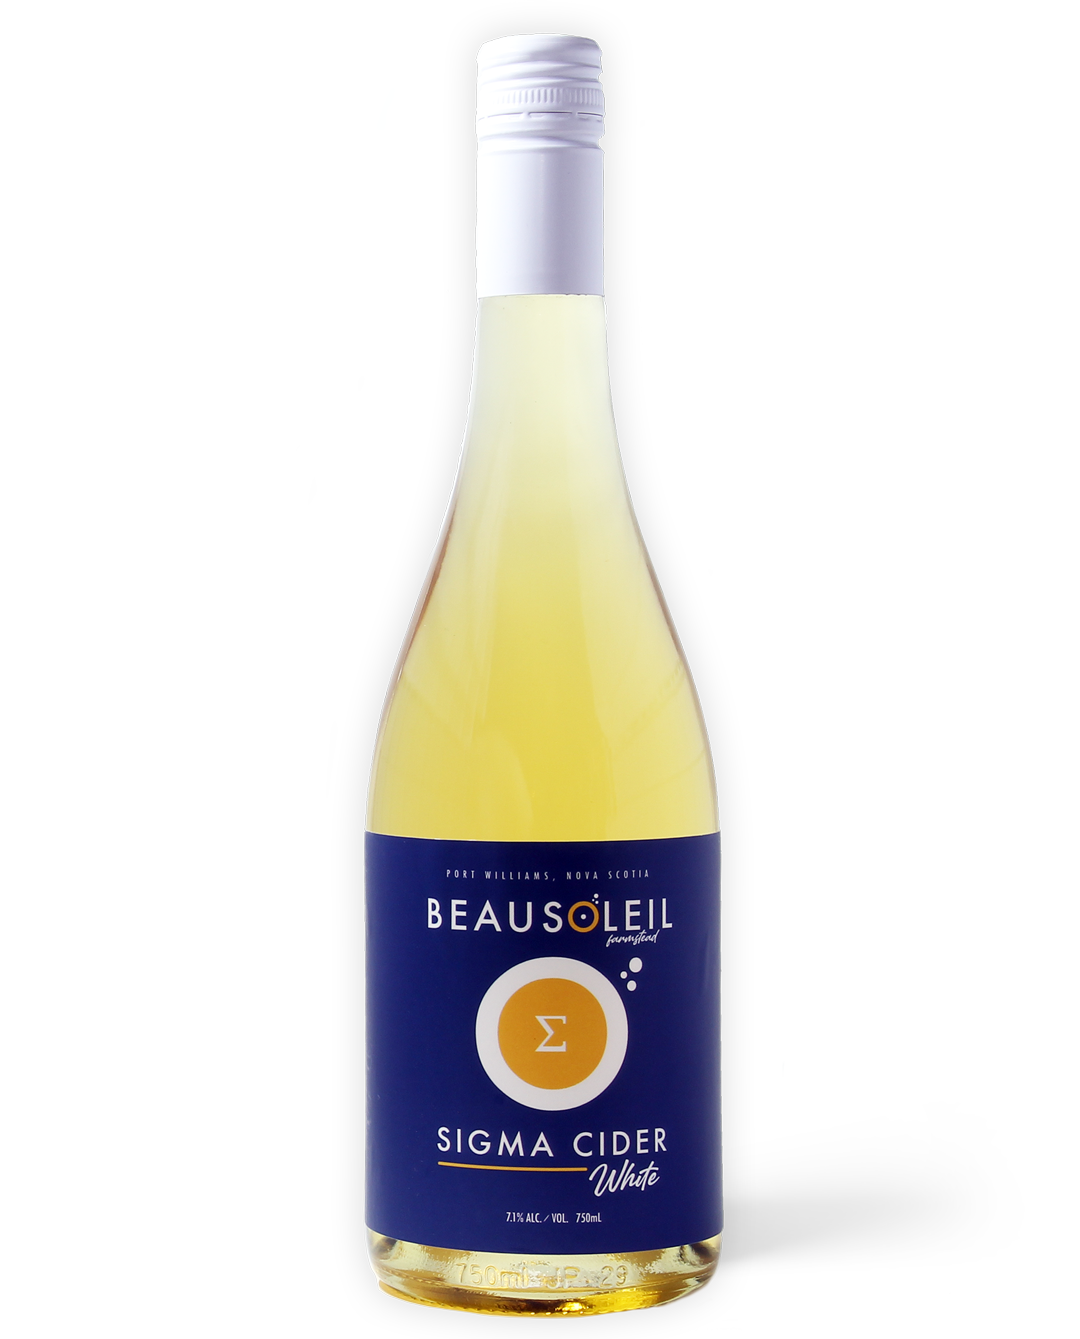 Photo: Bottle of Beausoleil Farmstead Sigma Cider White